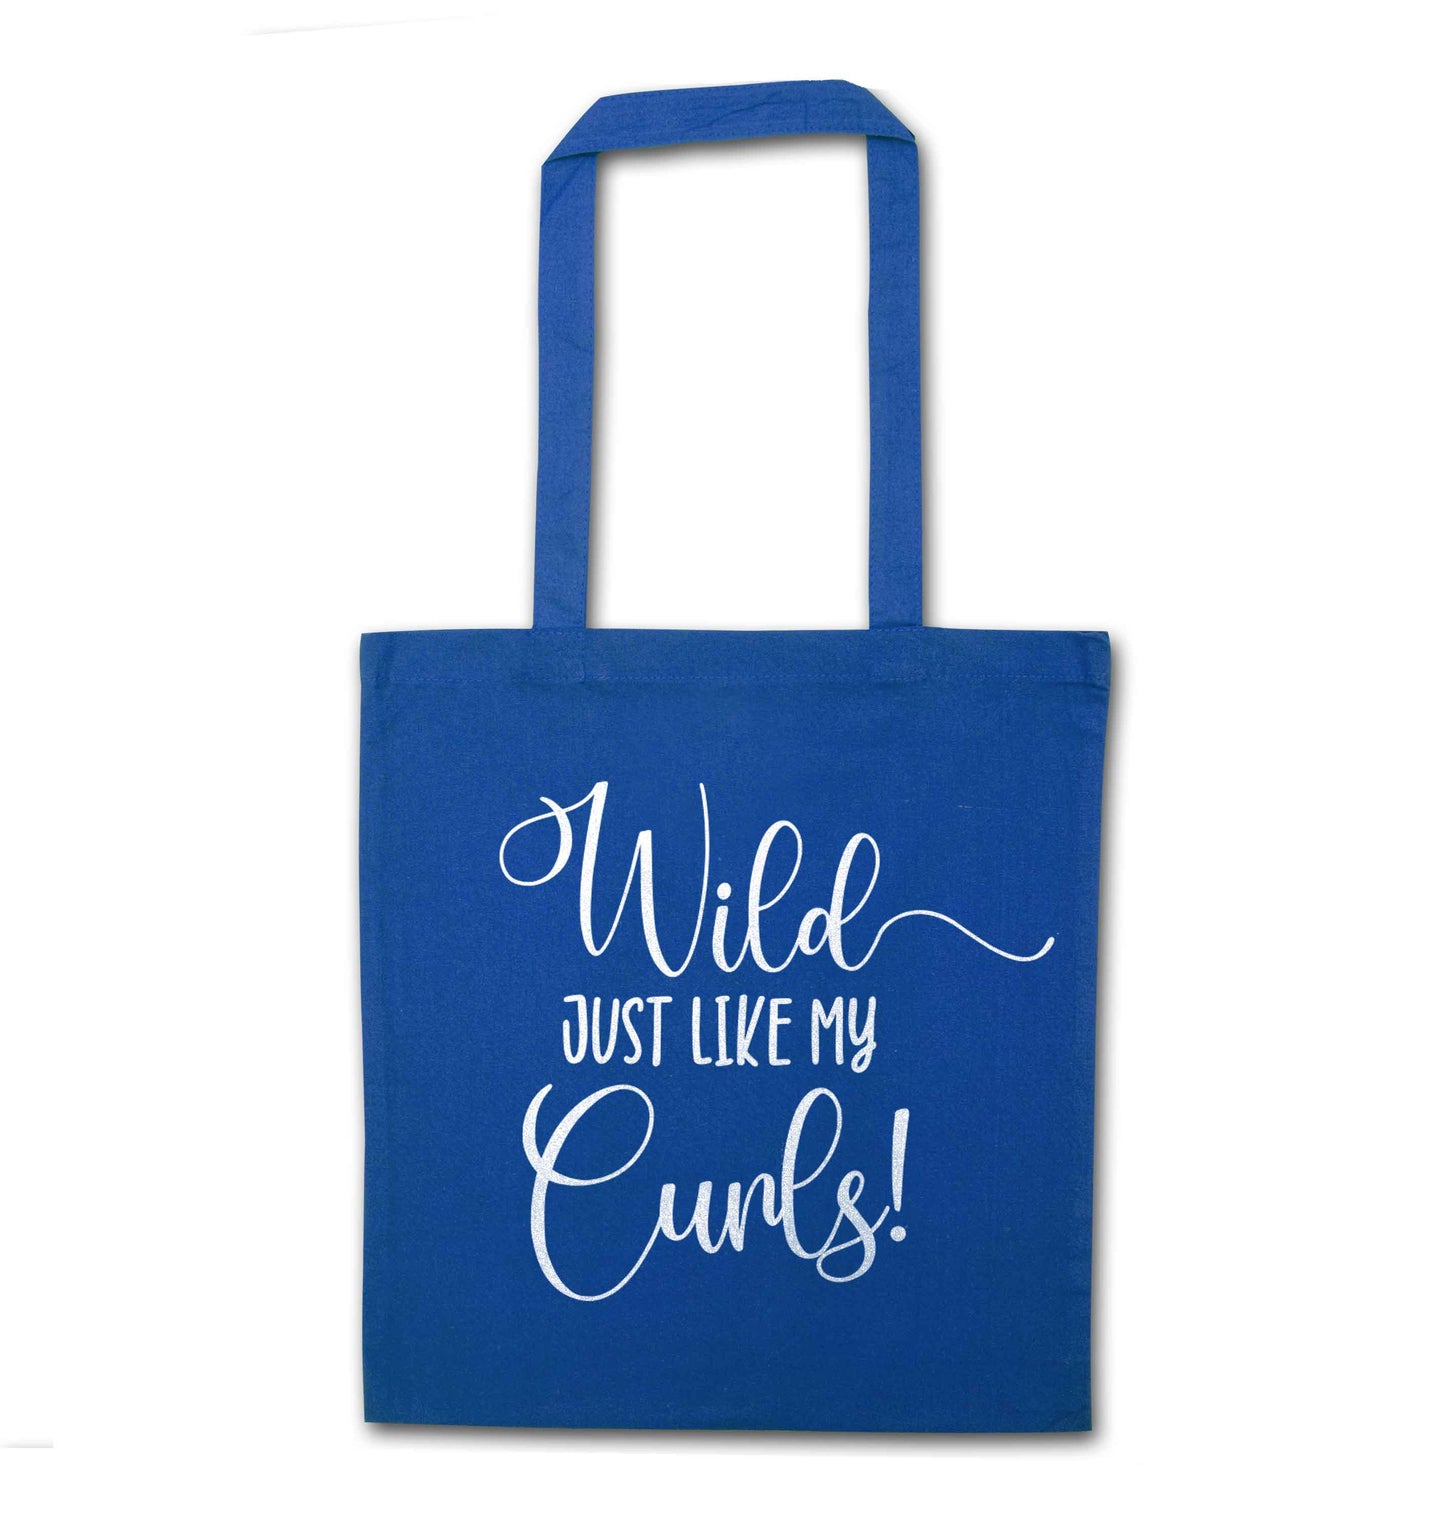 Wild just like my curls blue tote bag